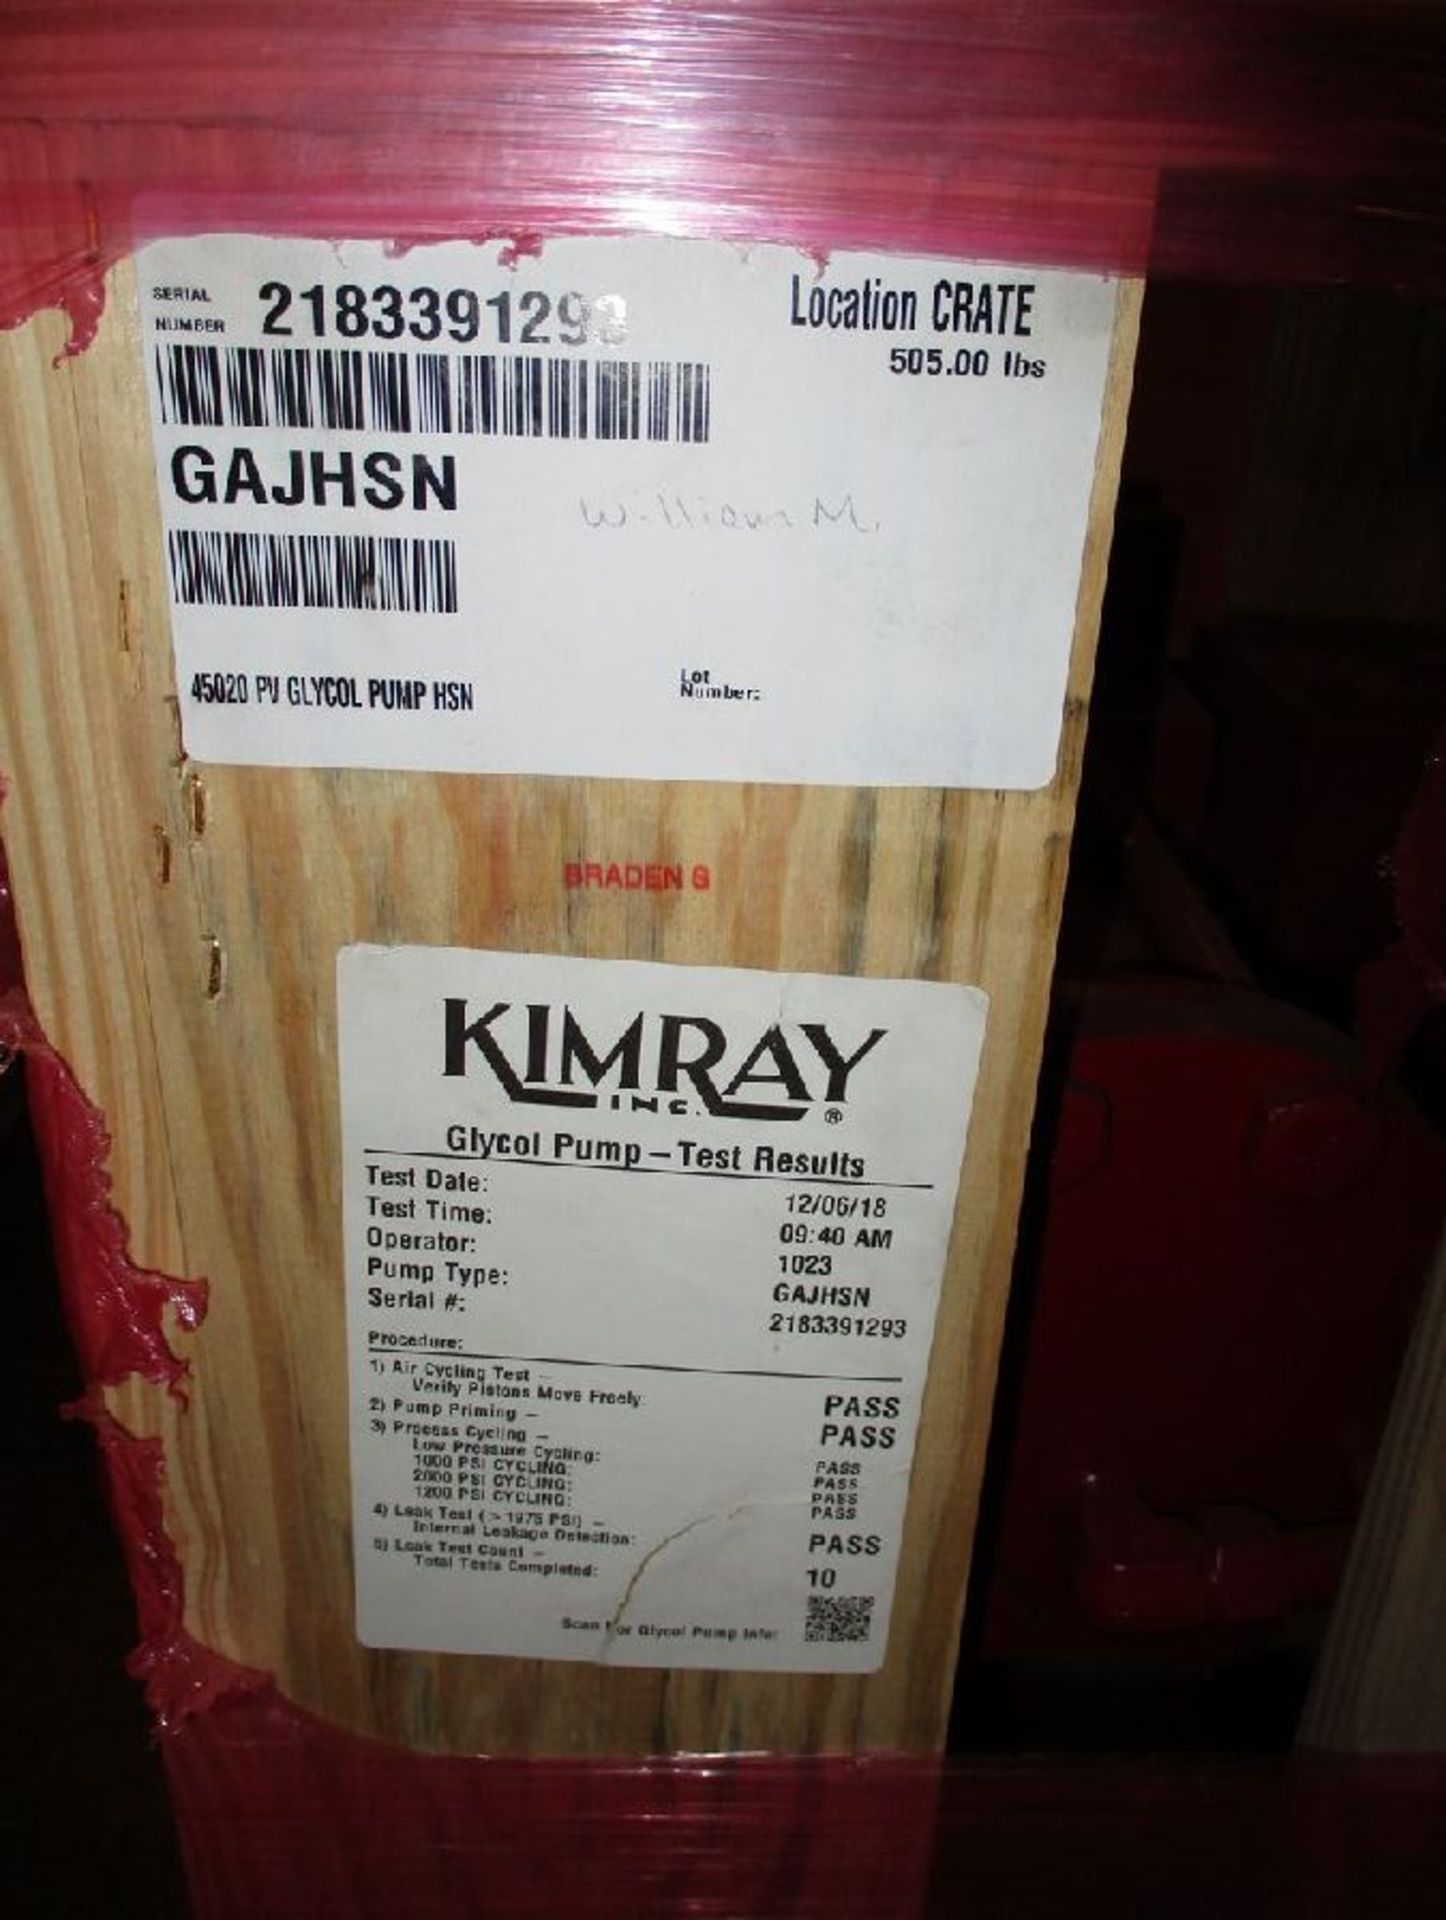 Model Kimray #GAJHSN 45020PV Unused Glycol Pumps